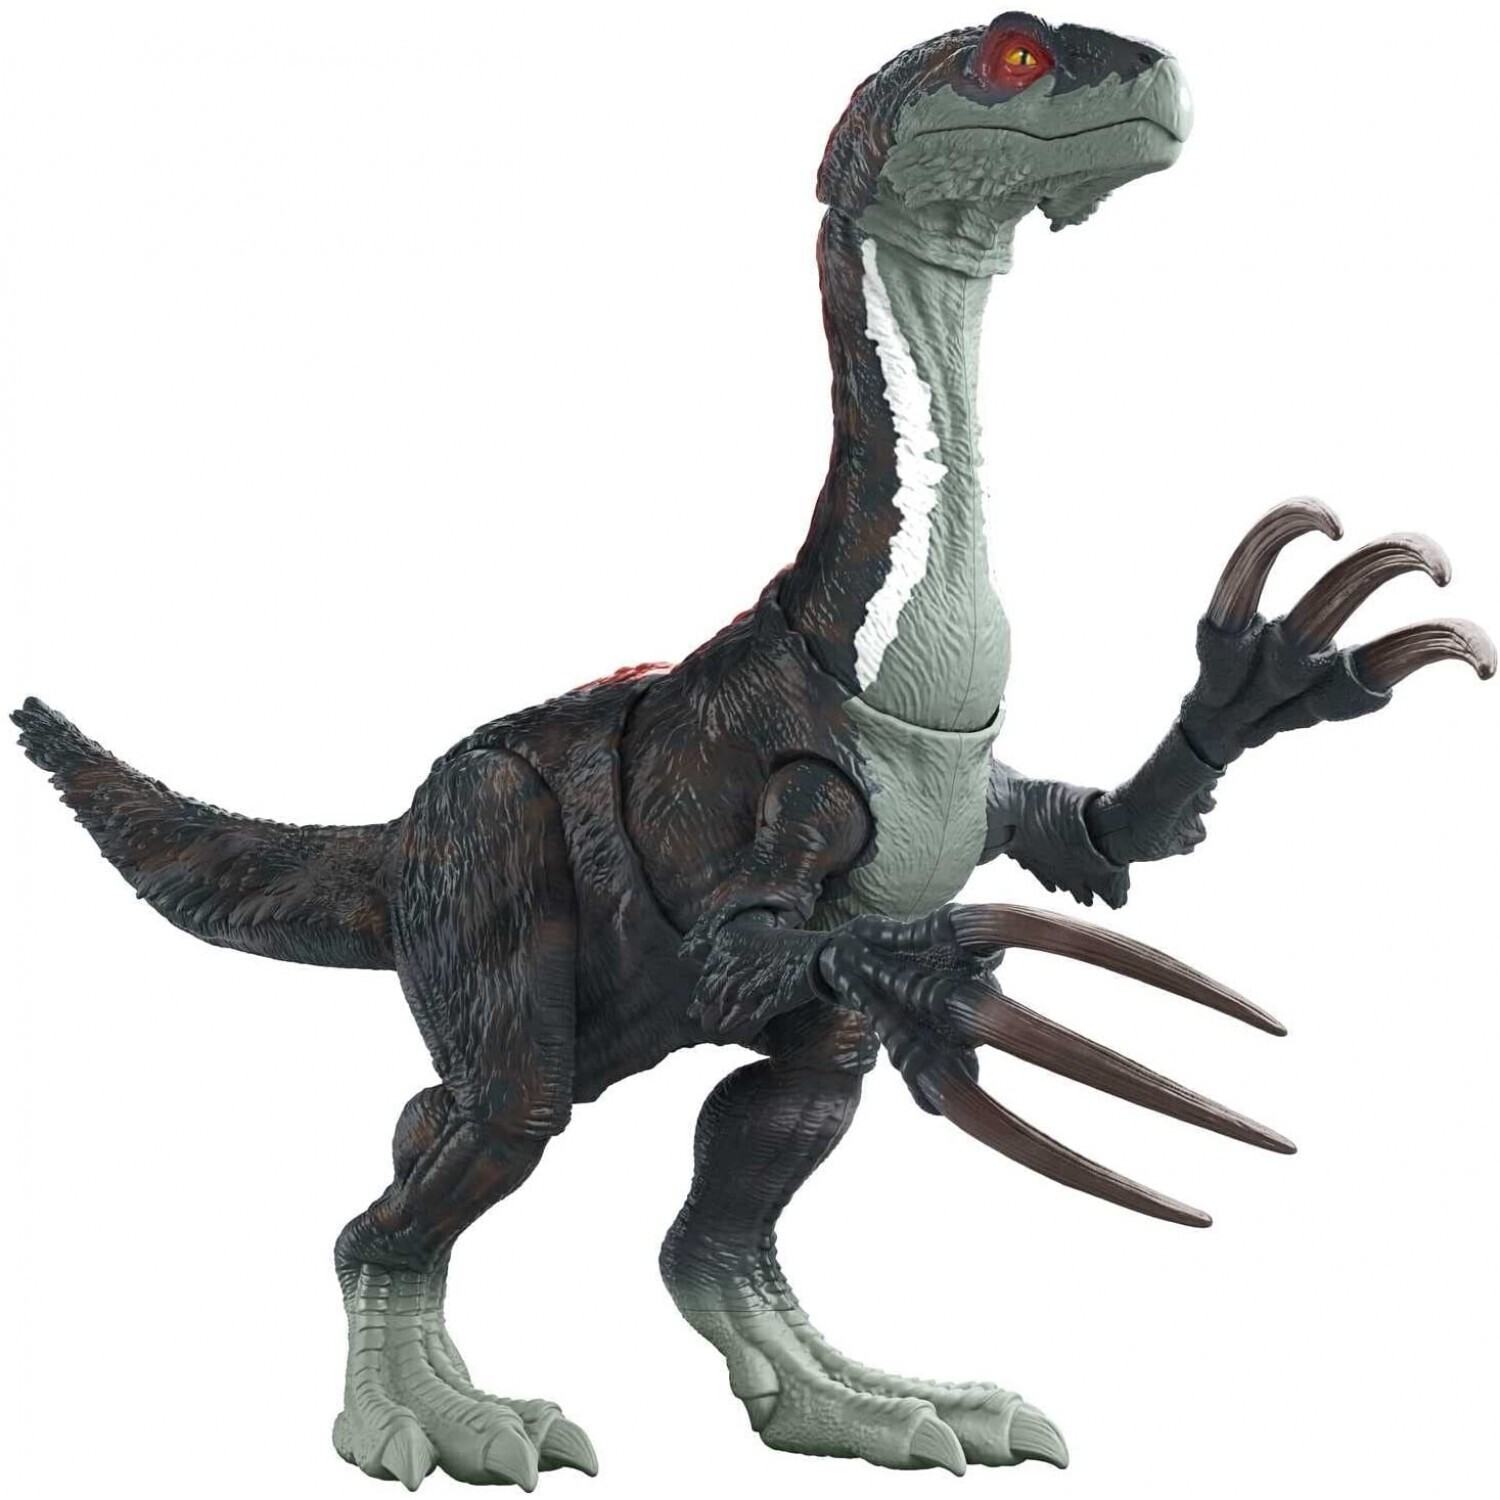 Jurassic world - dryptosaurus sonore - figurine dinosaure - 4 ans